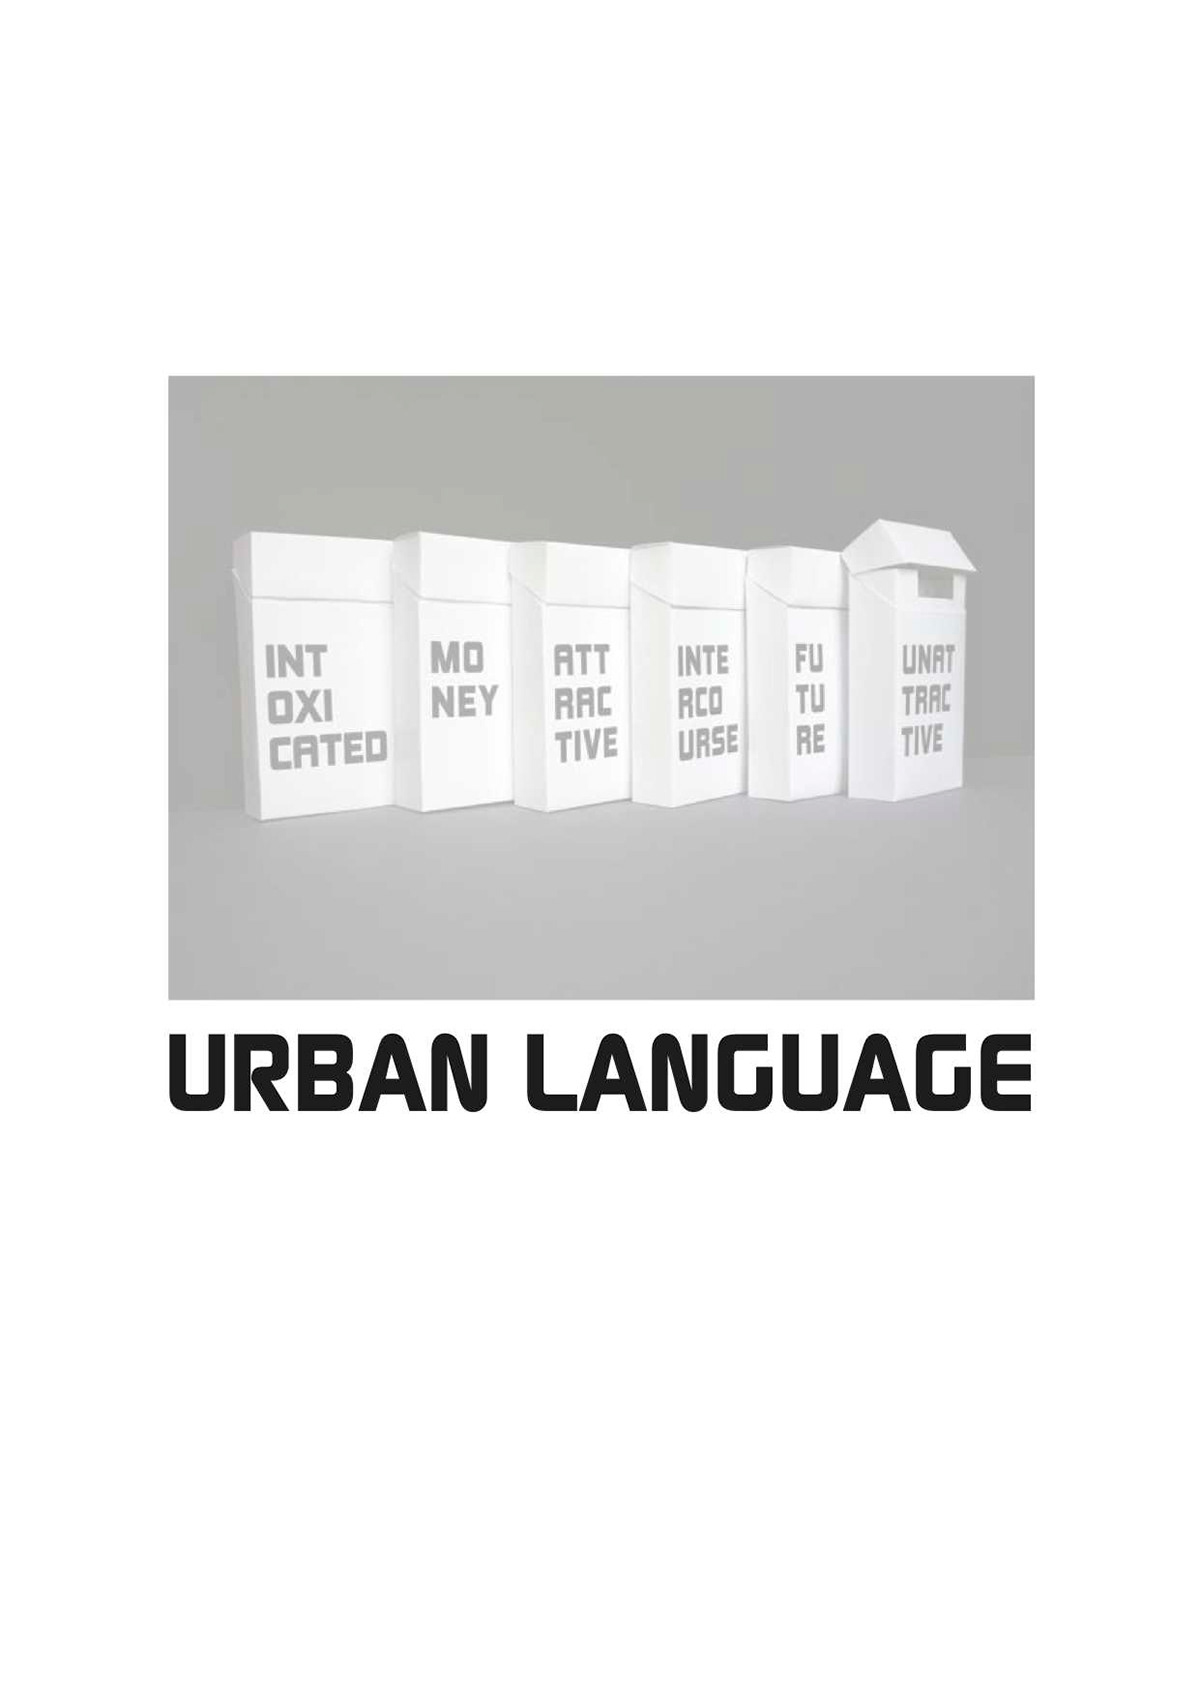 language communication Urban Shop design product designing creative interpretation